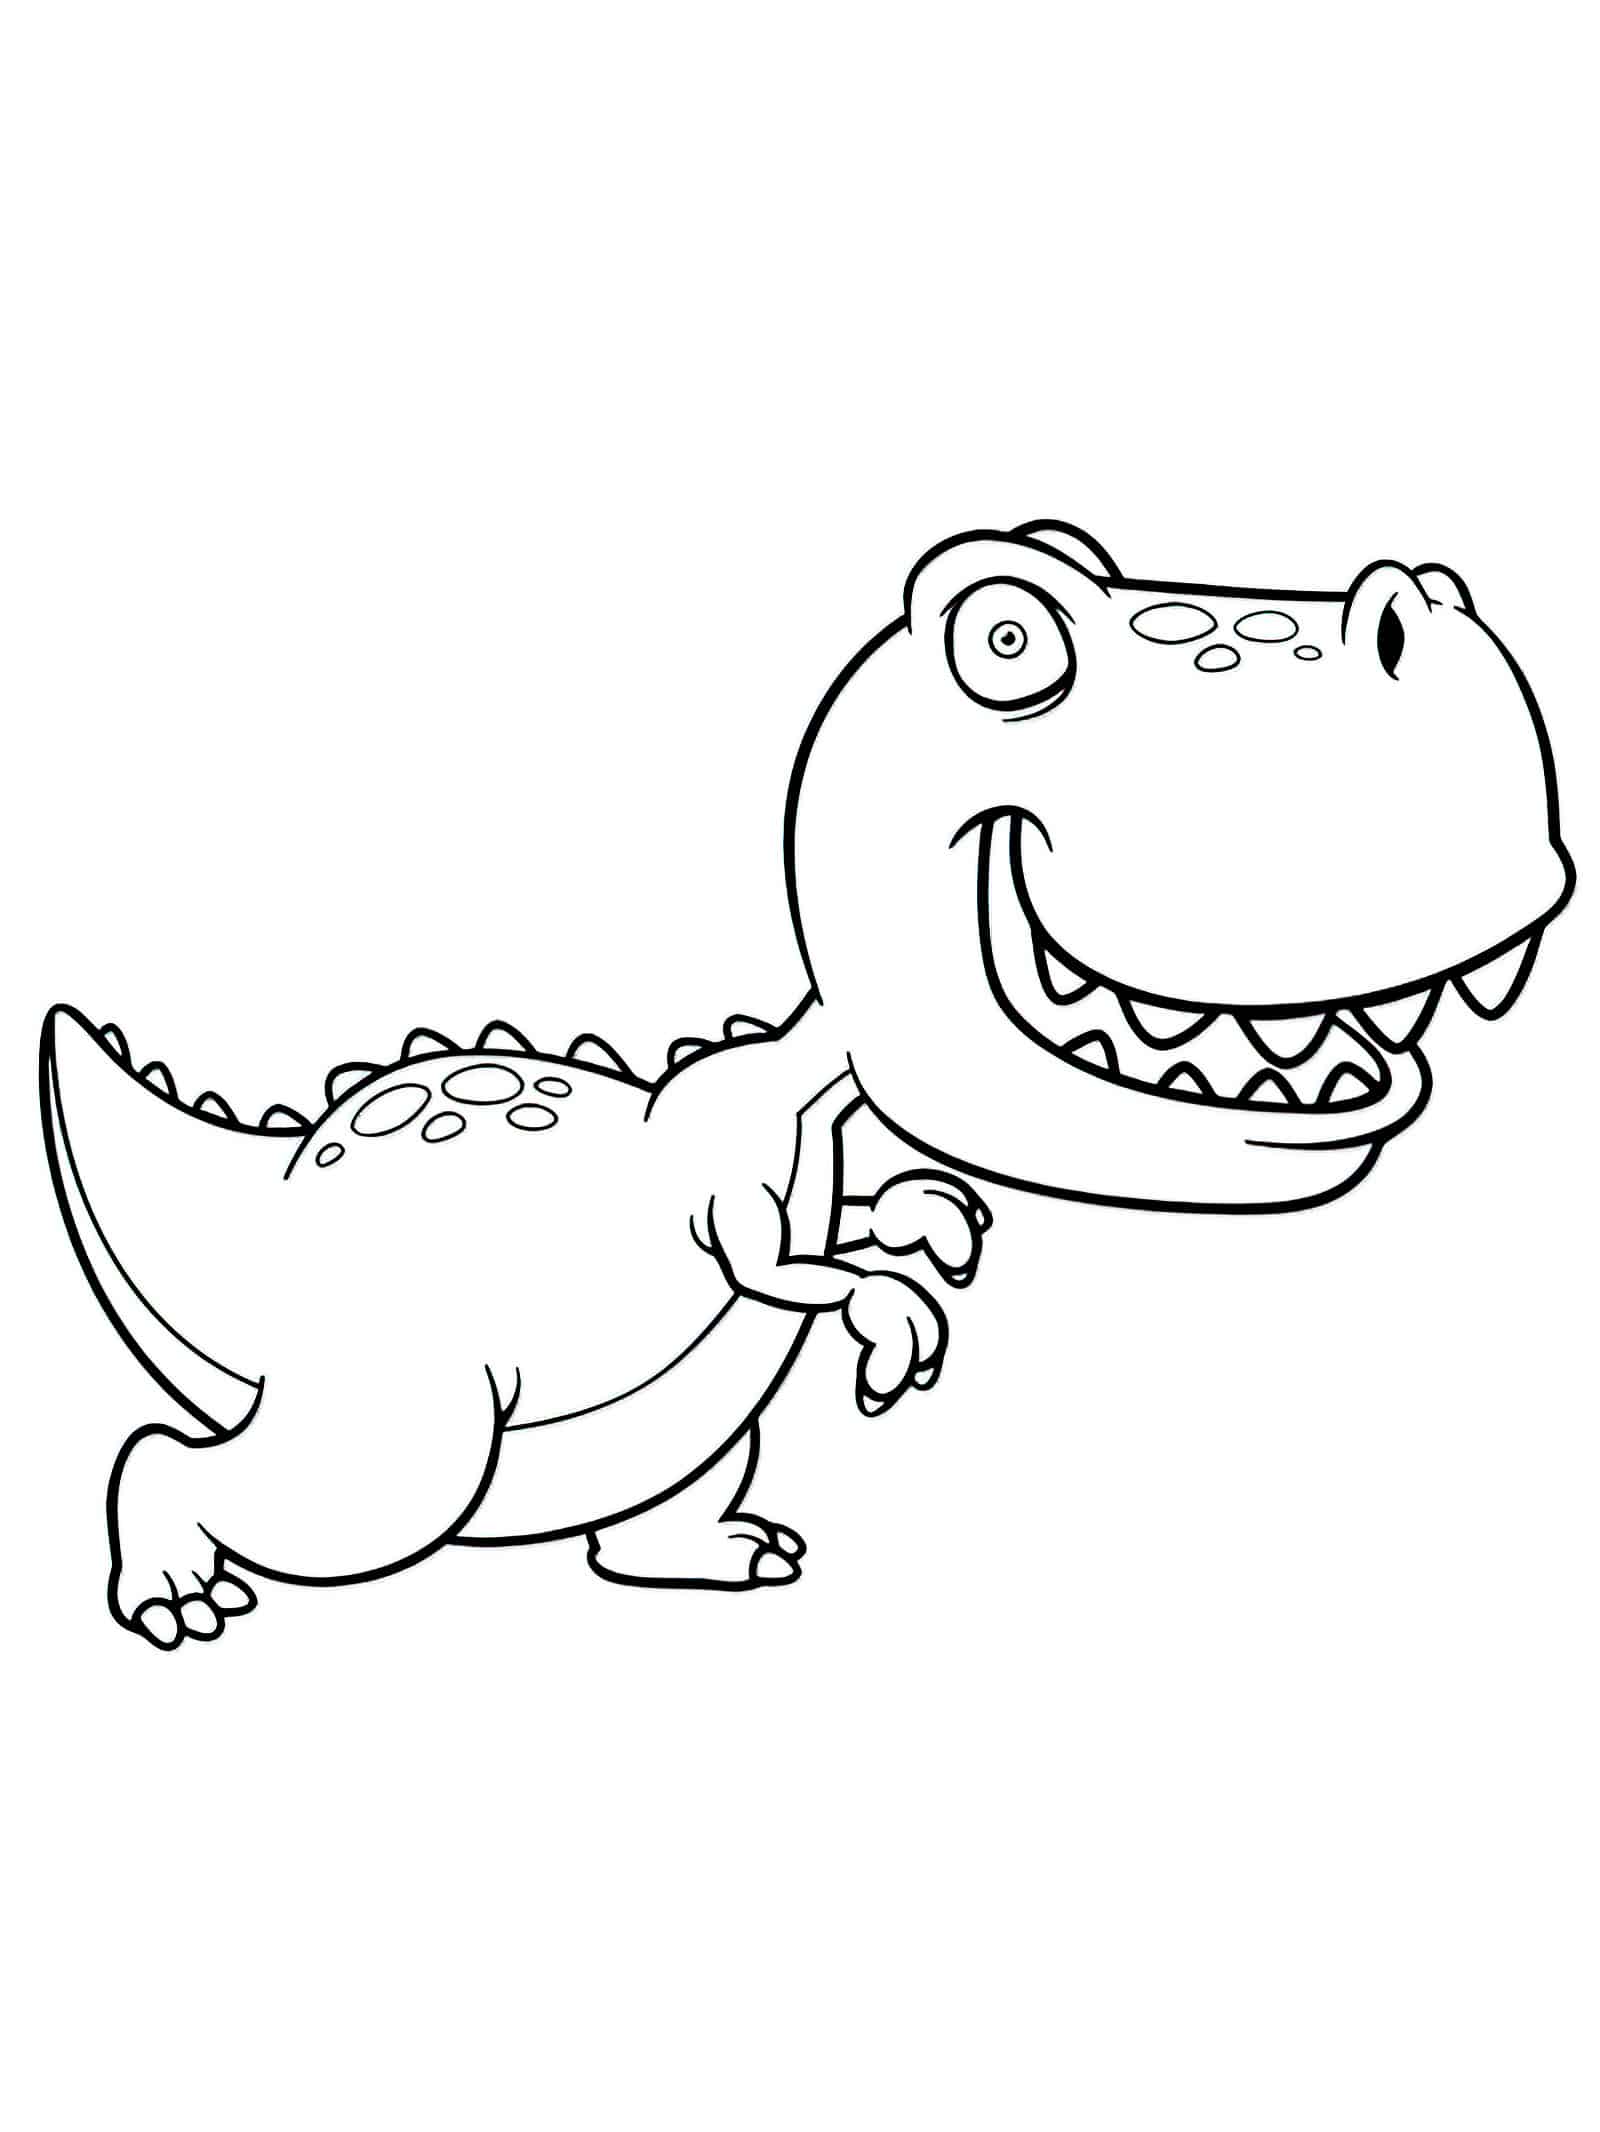 דף צביעה דינוזאור צוחק